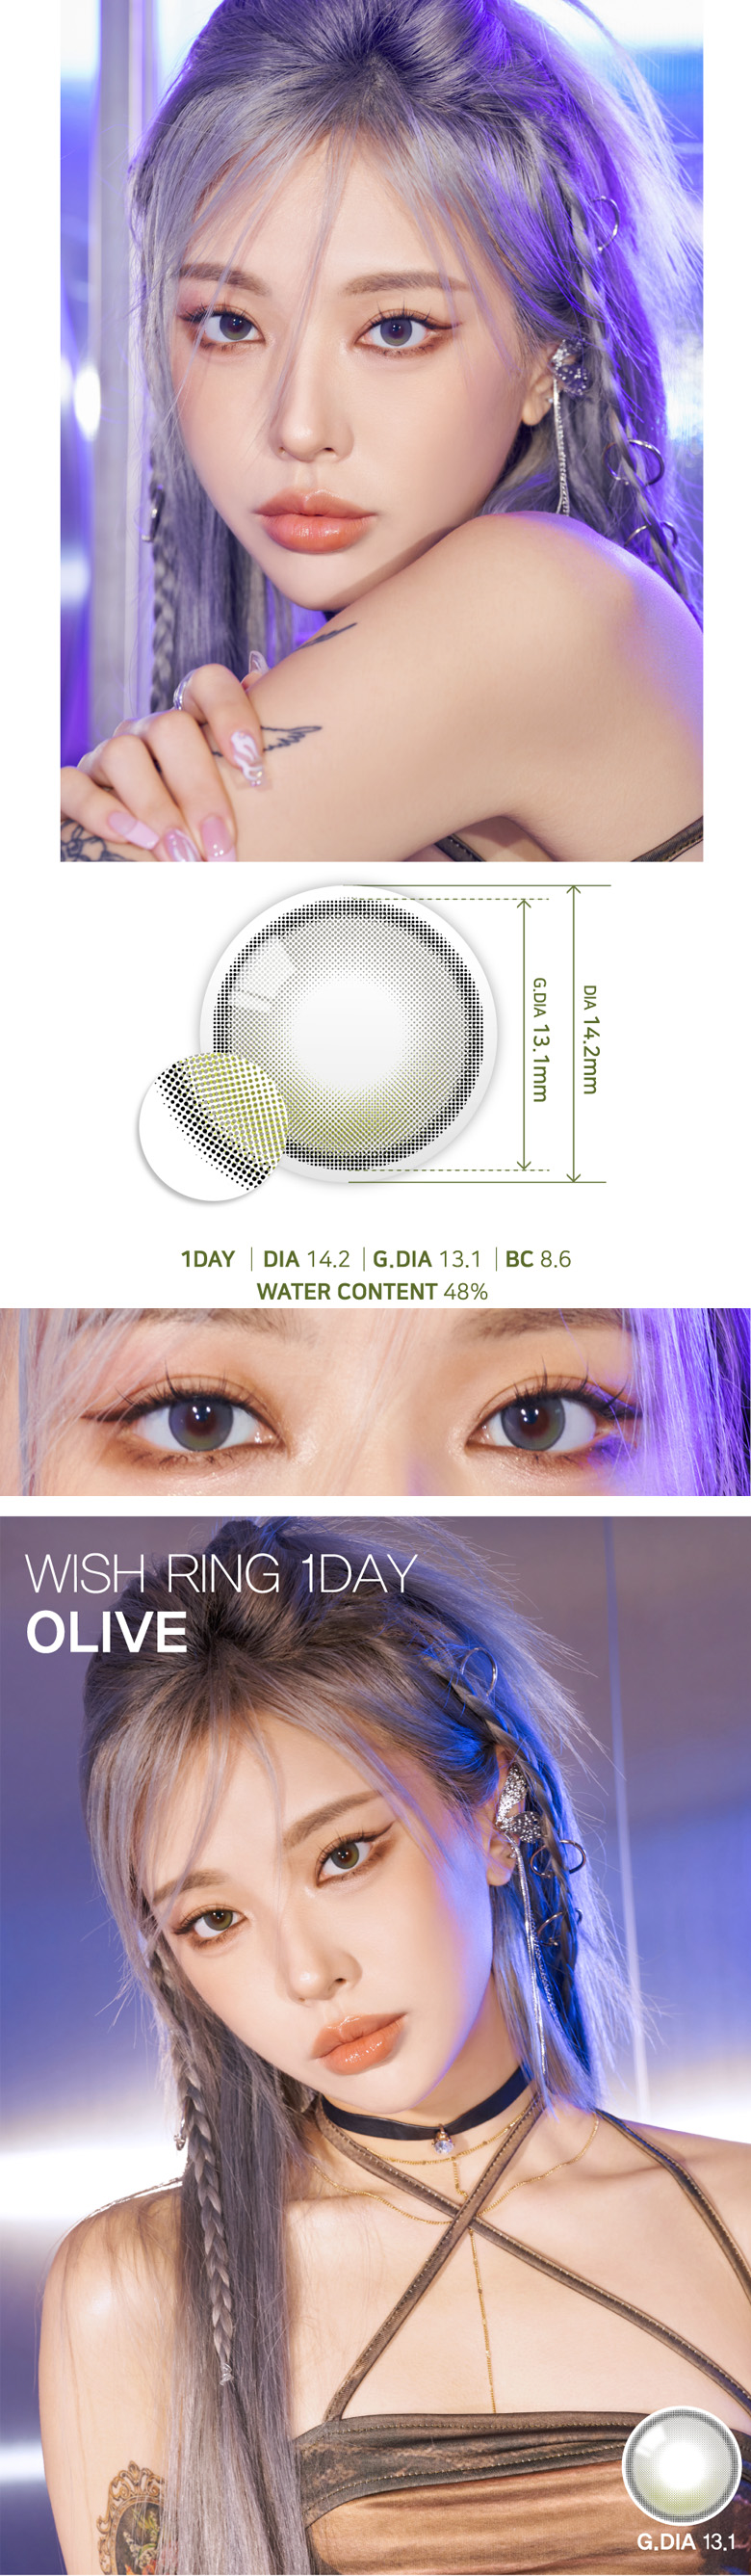 [1 Day/オリーブ/Olive] ウィッシュ リング ワンデー - Wish Ring - 1 Day (10pcs) [14.2mm]